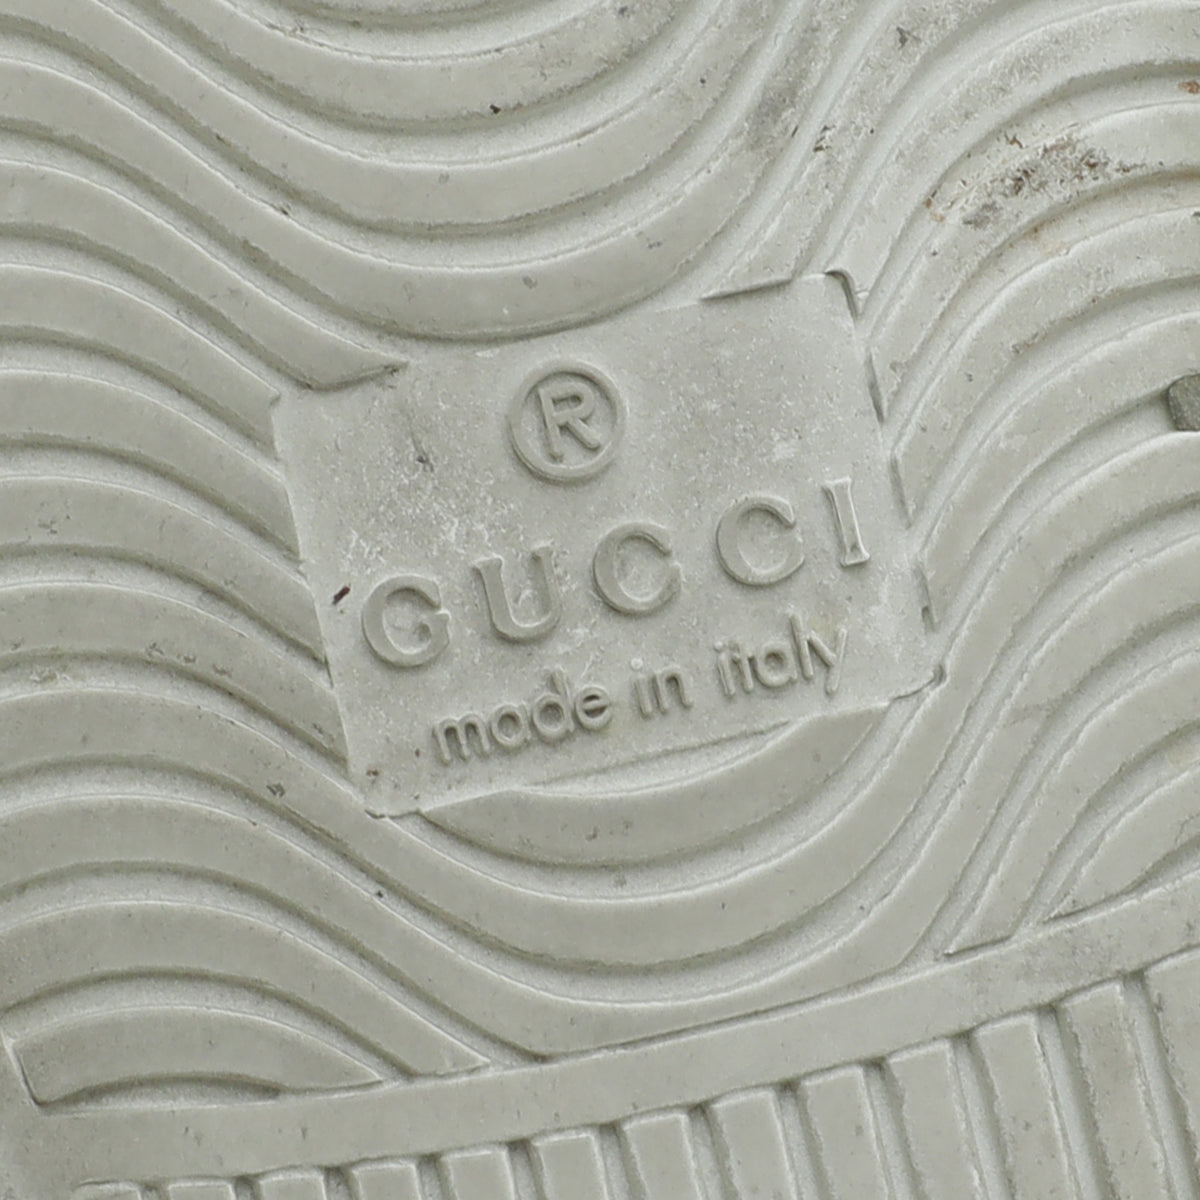 Gucci White Ace Web Pearl Studs Sneaker 39